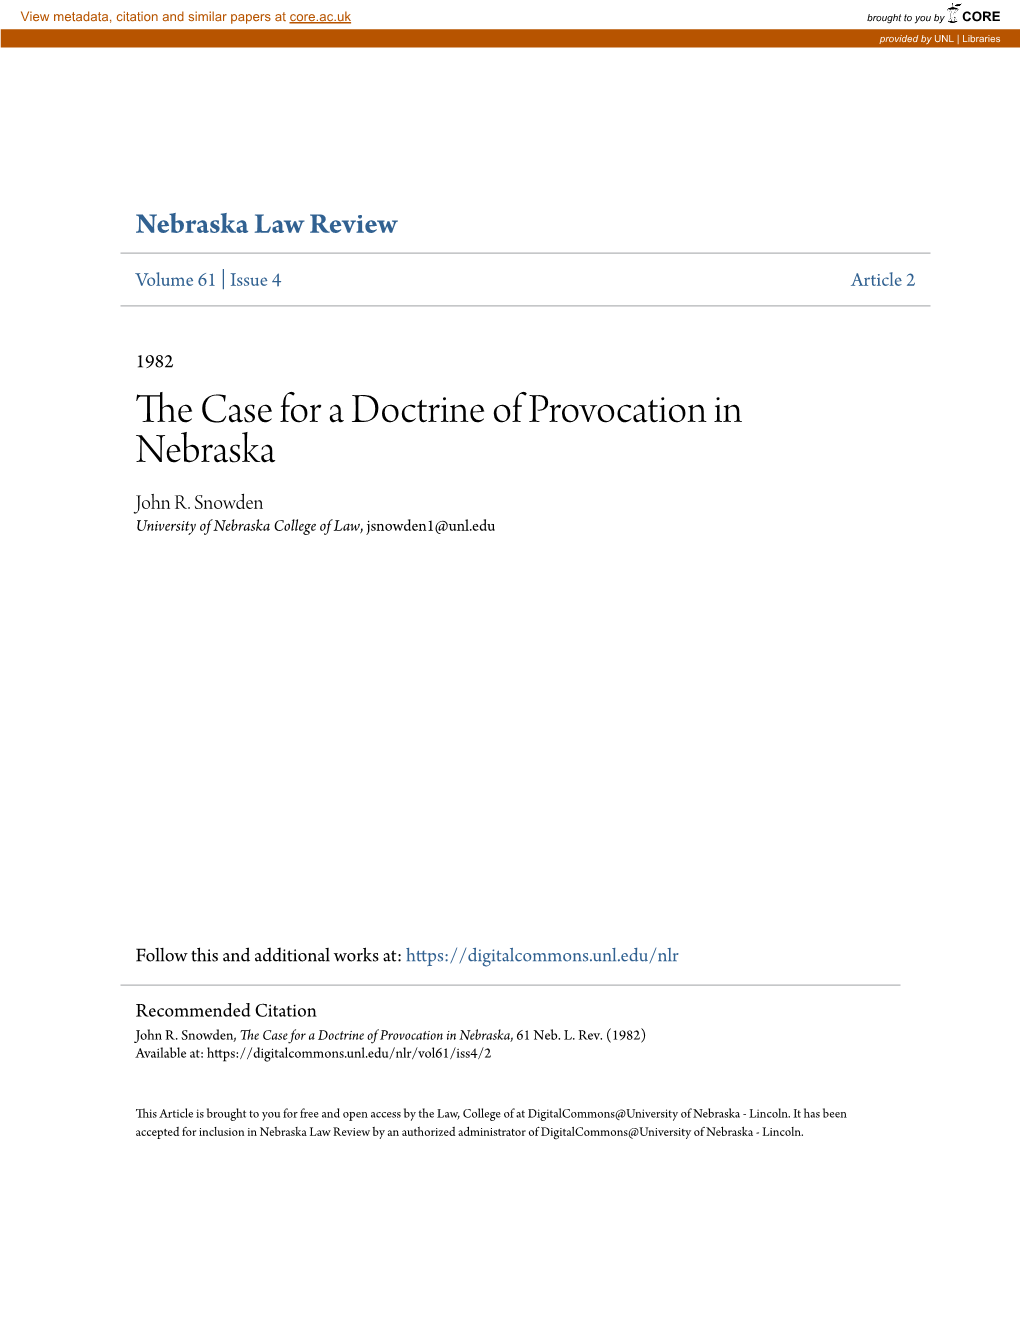 The Case for a Doctrine of Provocation in Nebraska, 61 Neb